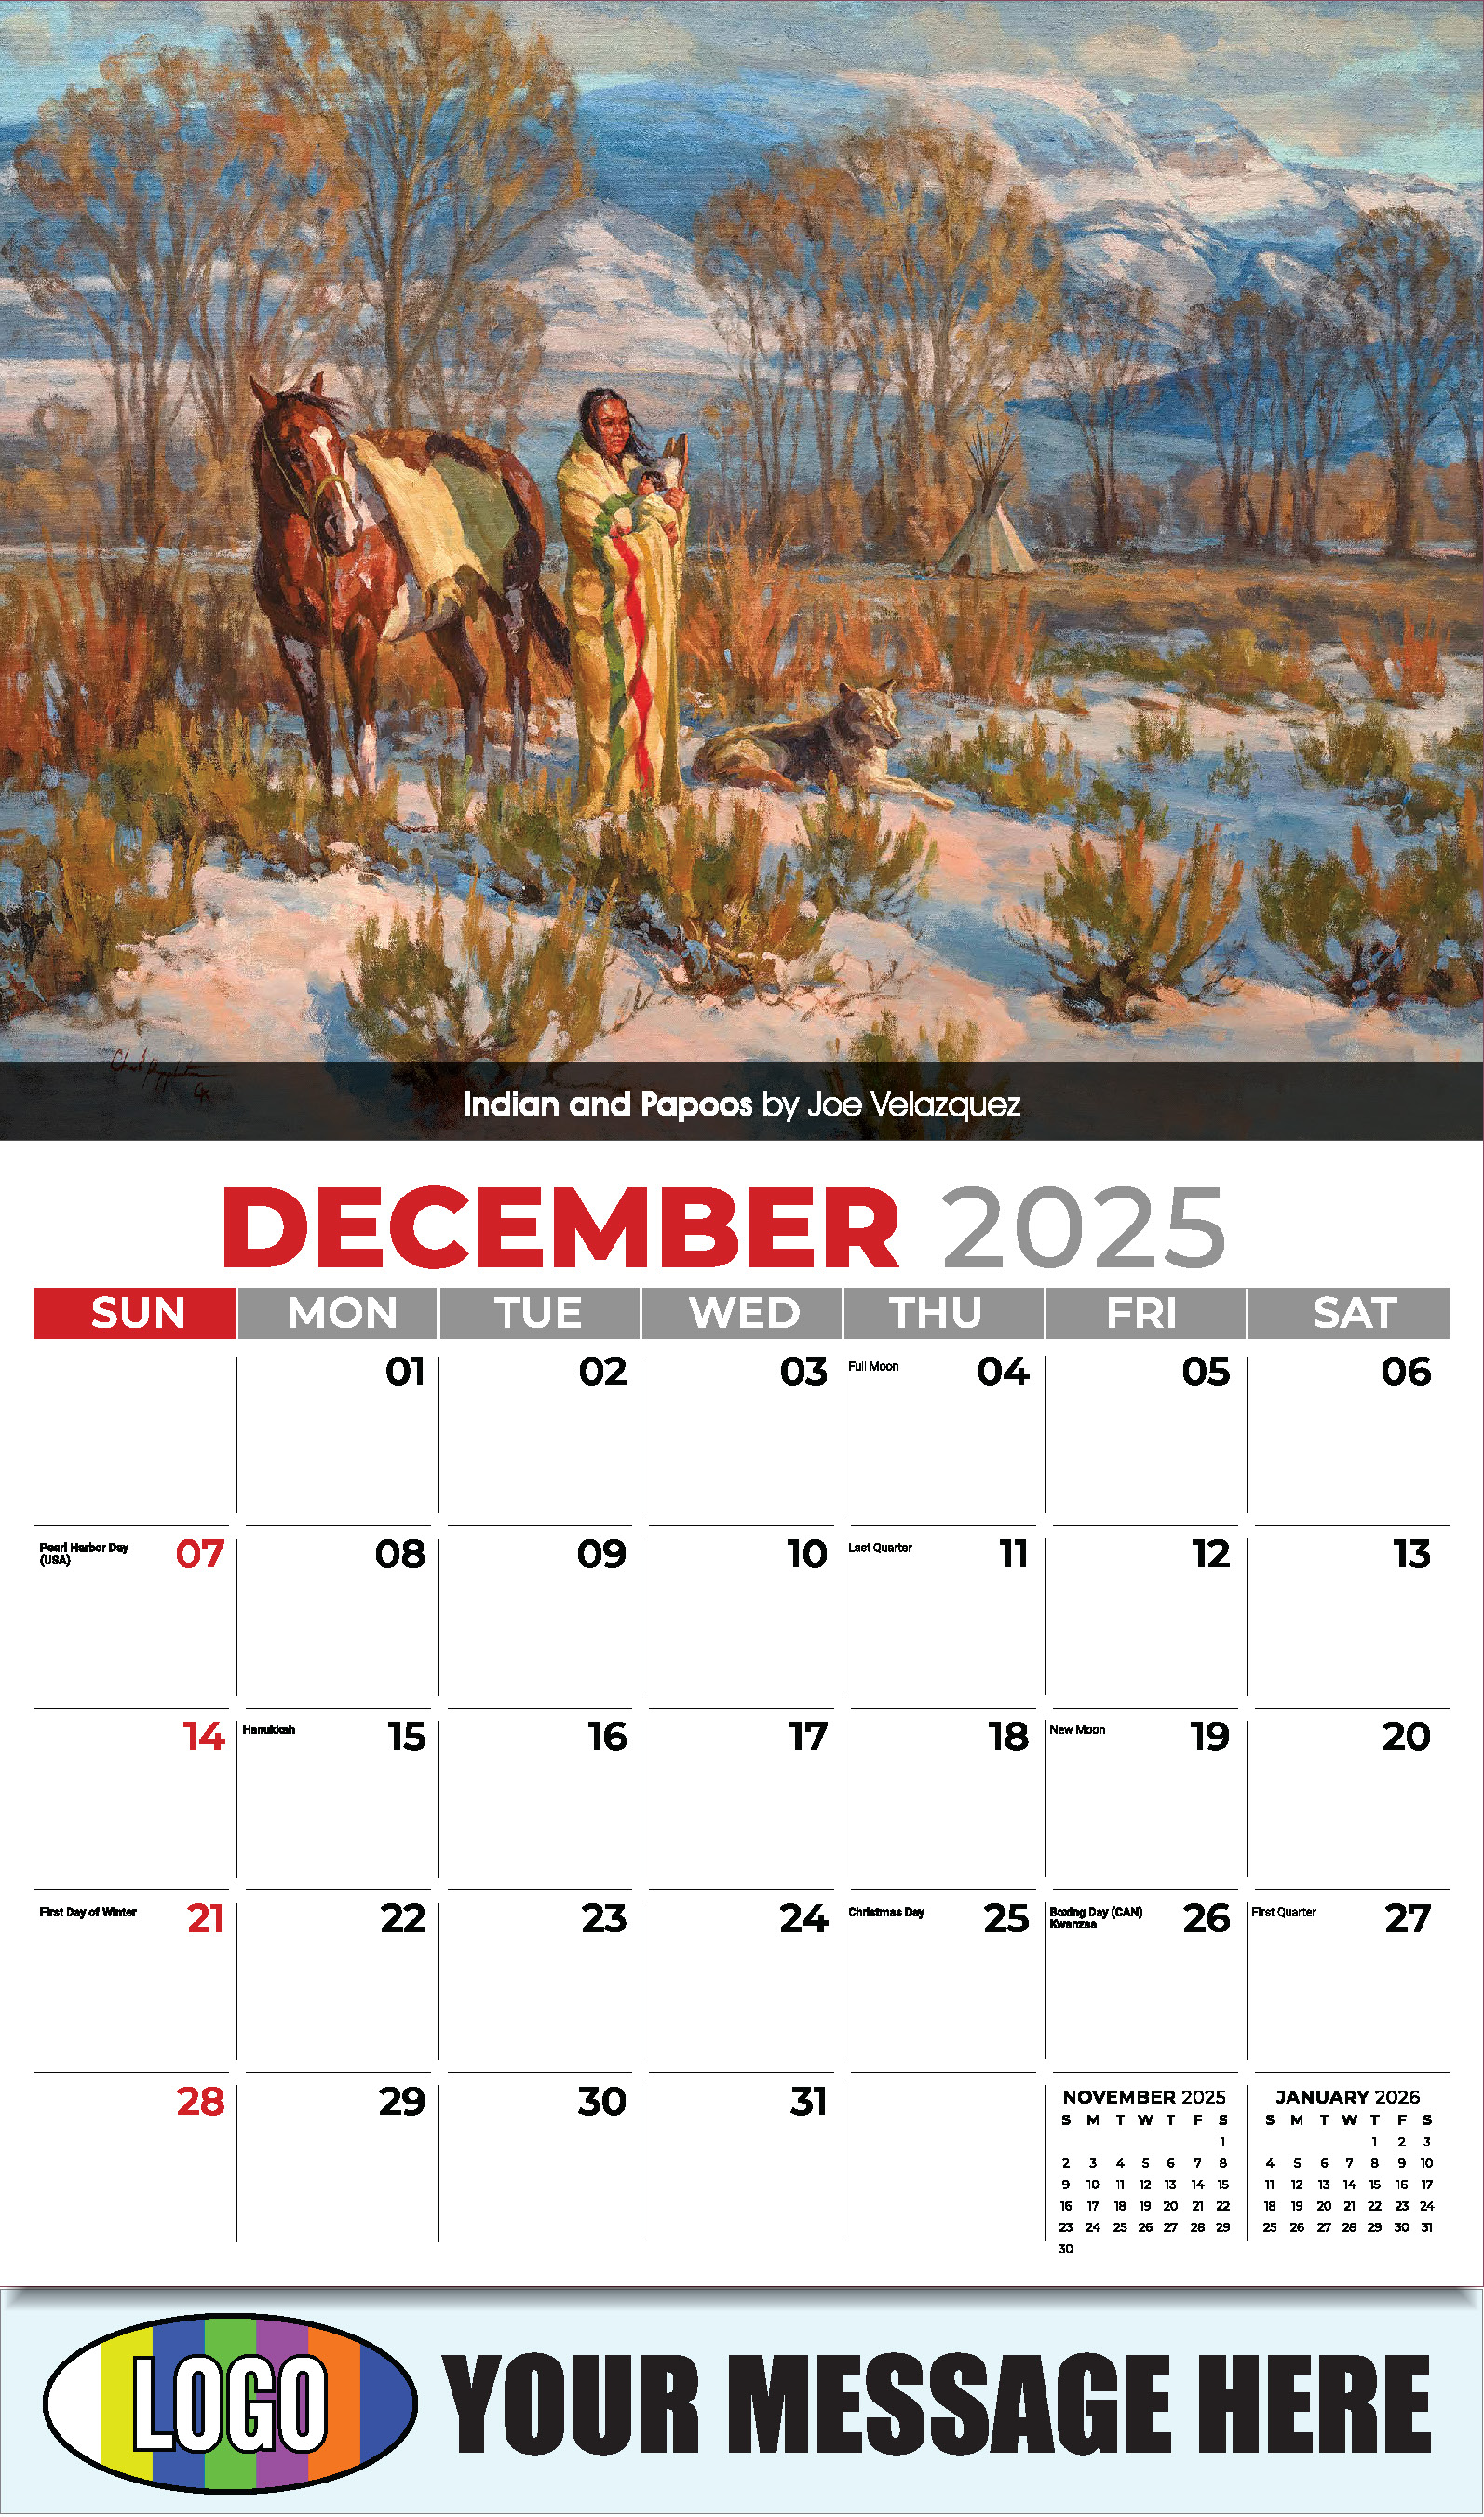 Spirit of the Old West 2025 Old West Art Business Promo Wall Calendar - December